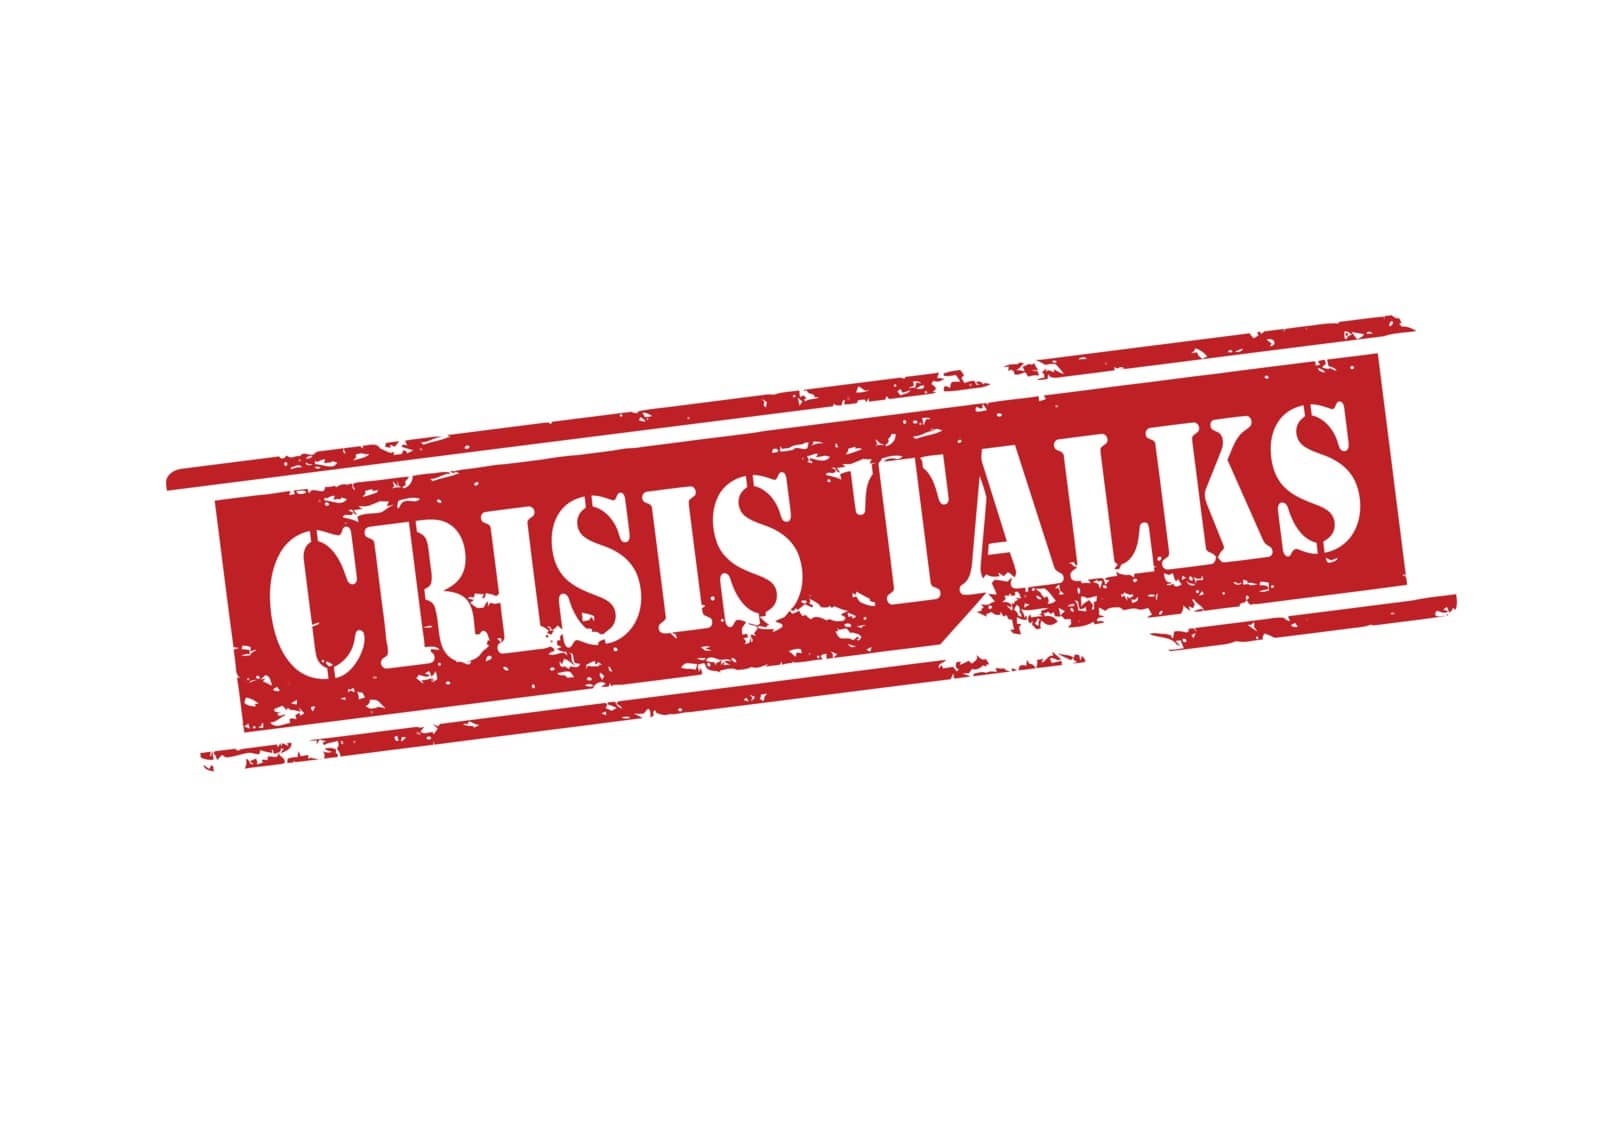 Crisis talks by carmenbobo